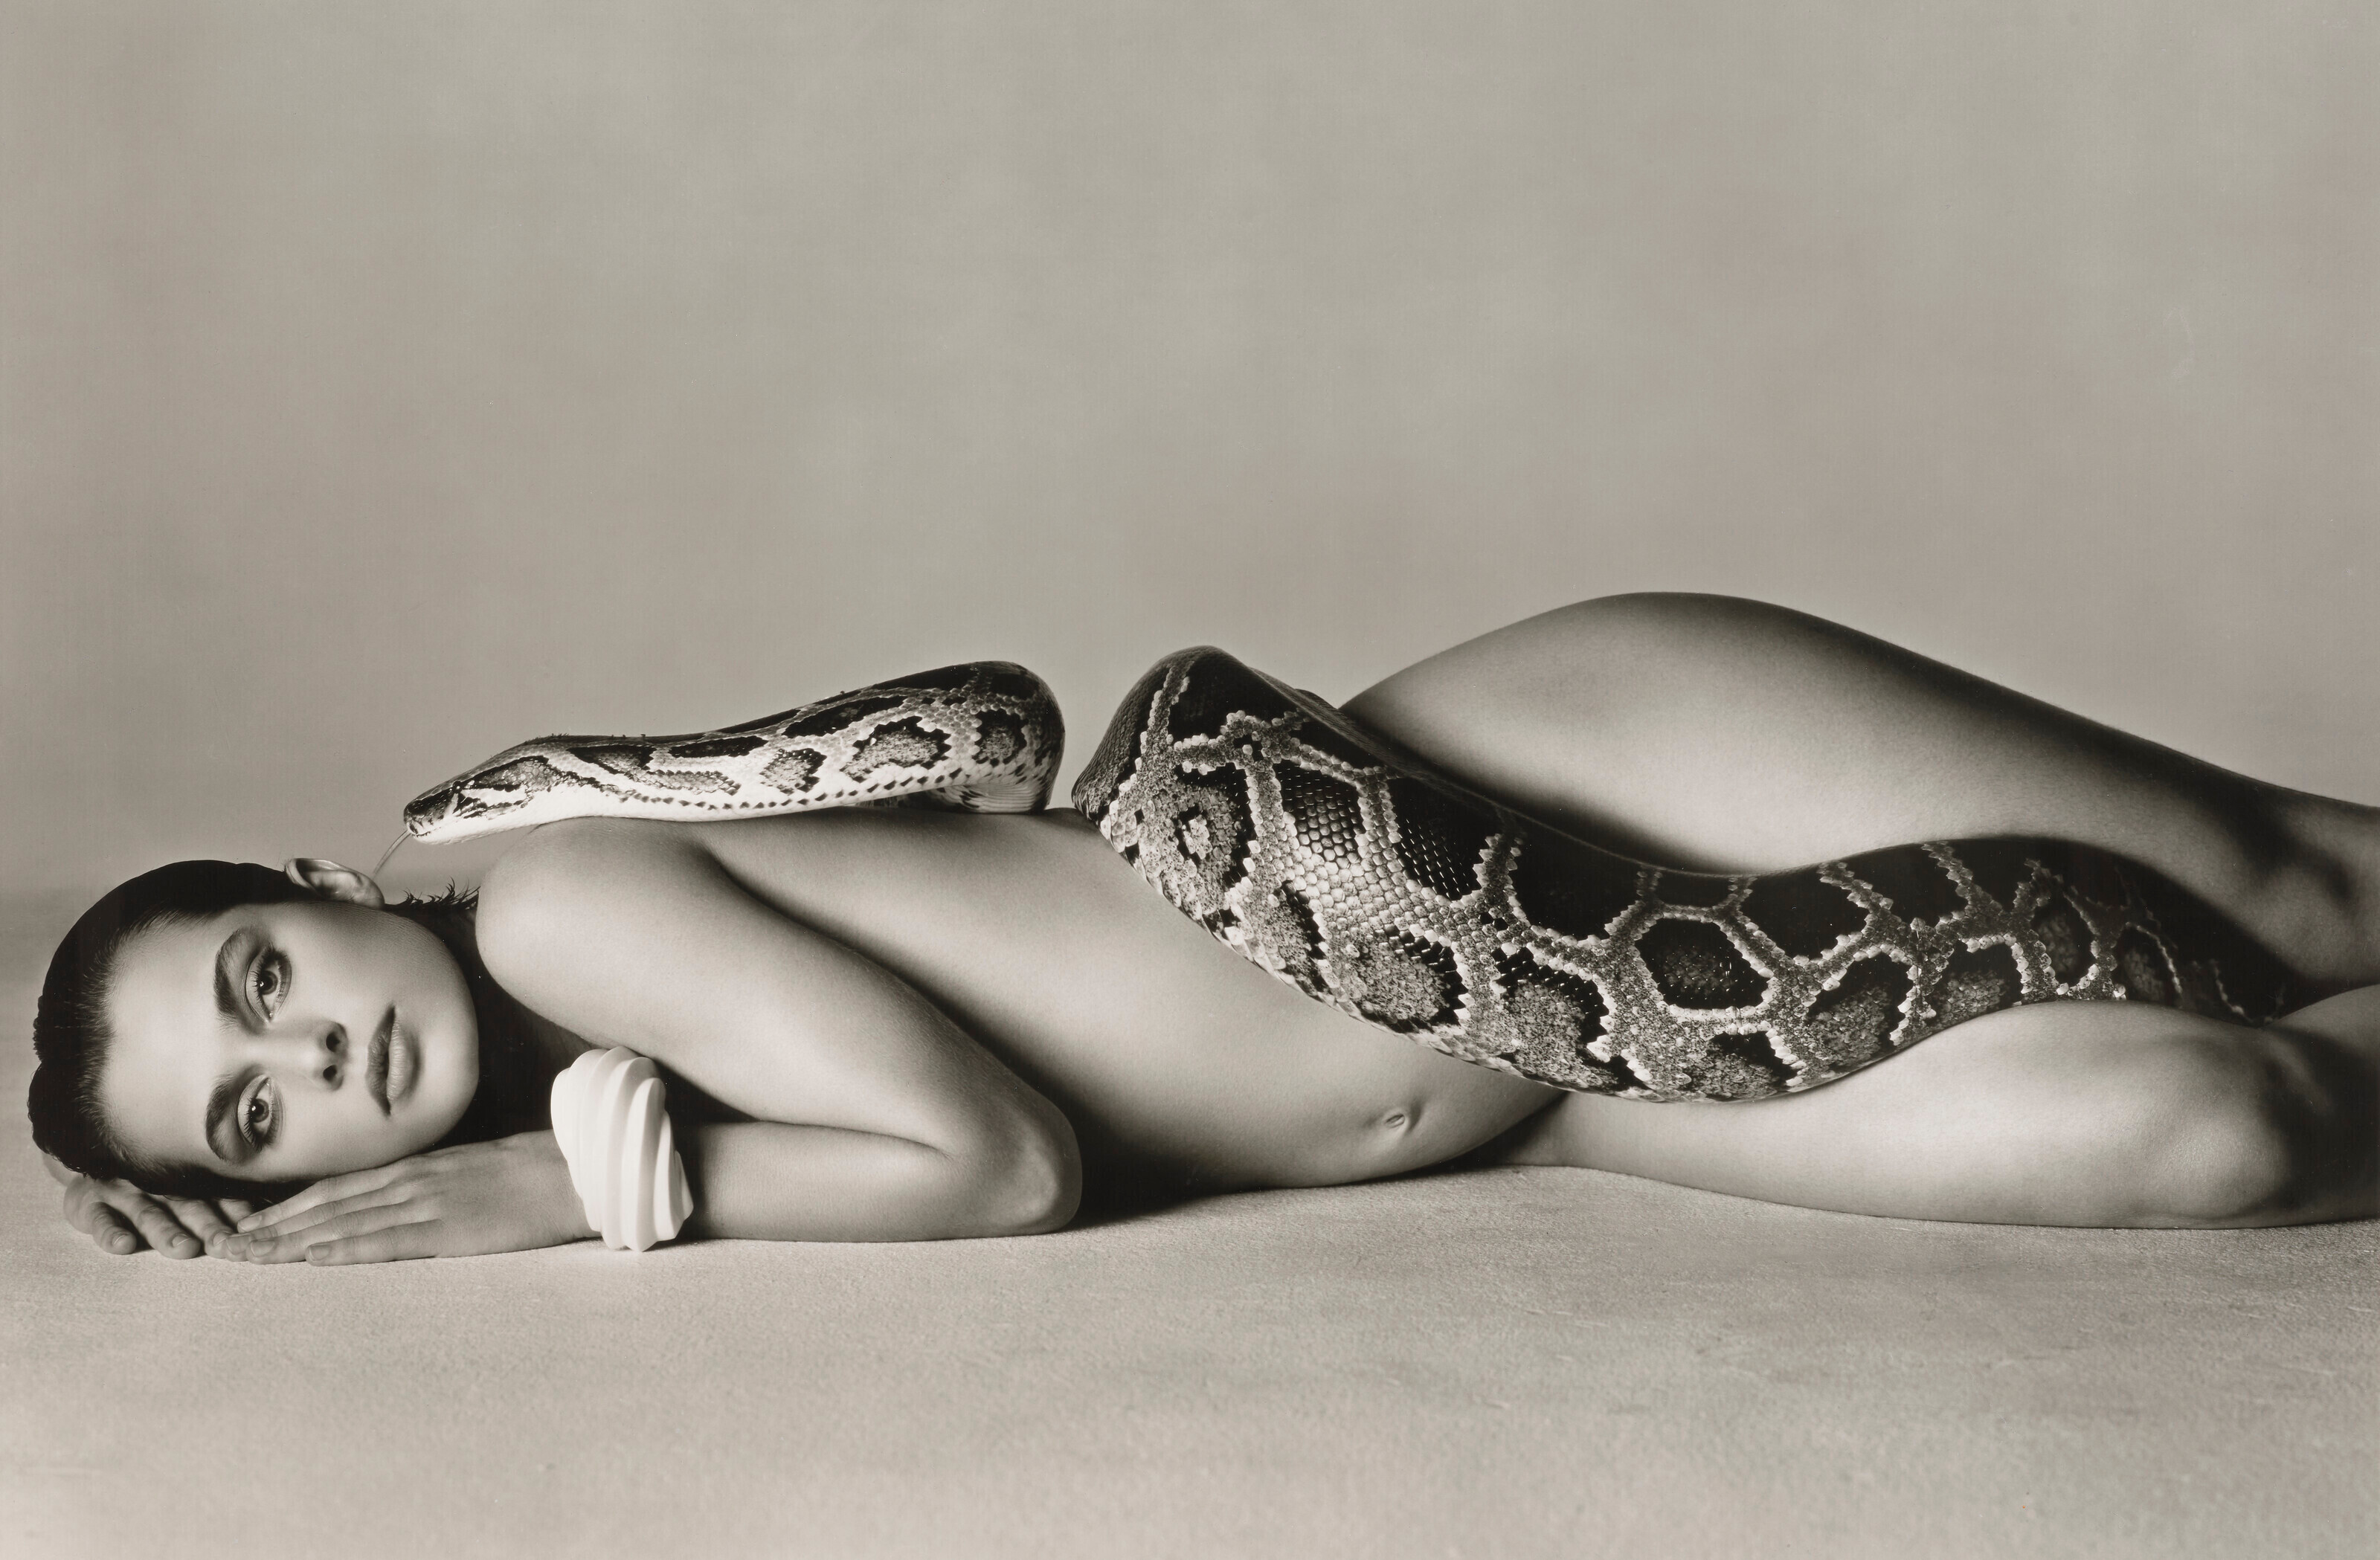 Настасья Кински и Змей, Лос-Анджелес, Калифорния, 14 июня 1981 года.  Фотограф Ричард Аведон